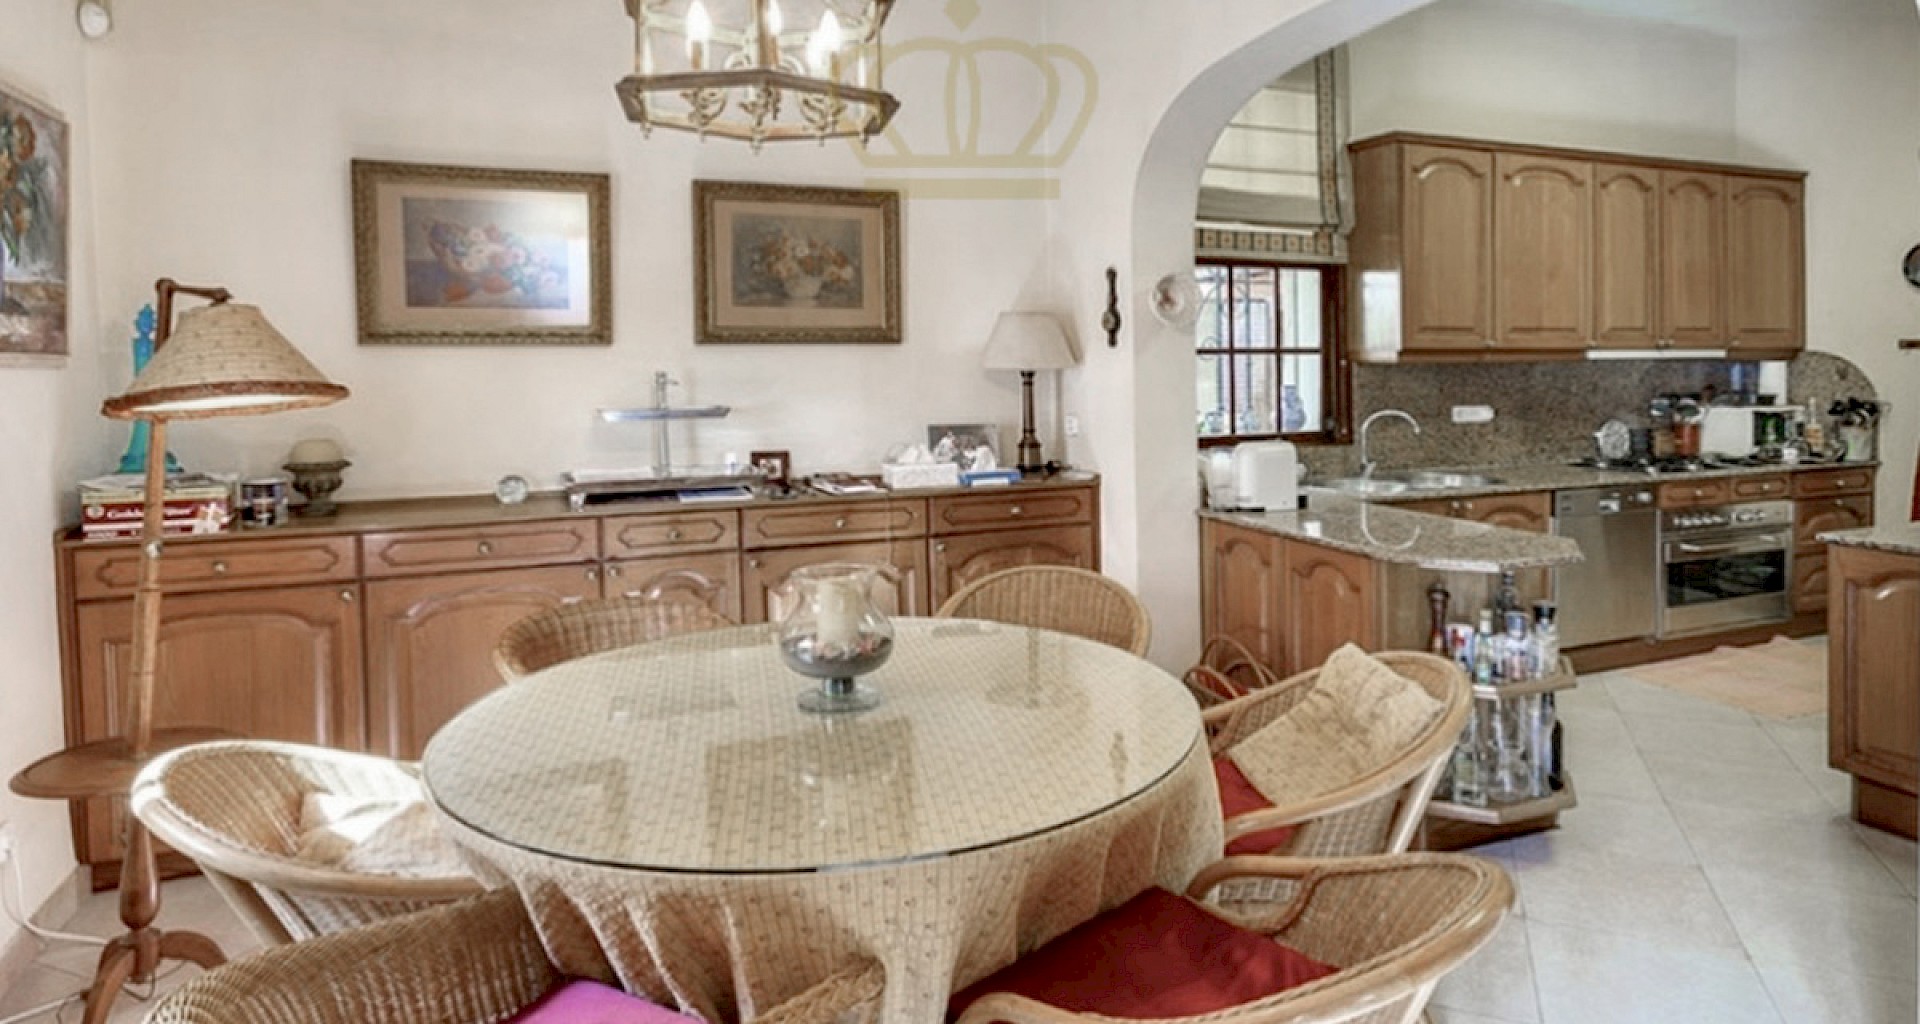 KROHN & LUEDEMANN Classic villa in San Augustin as an investment property 